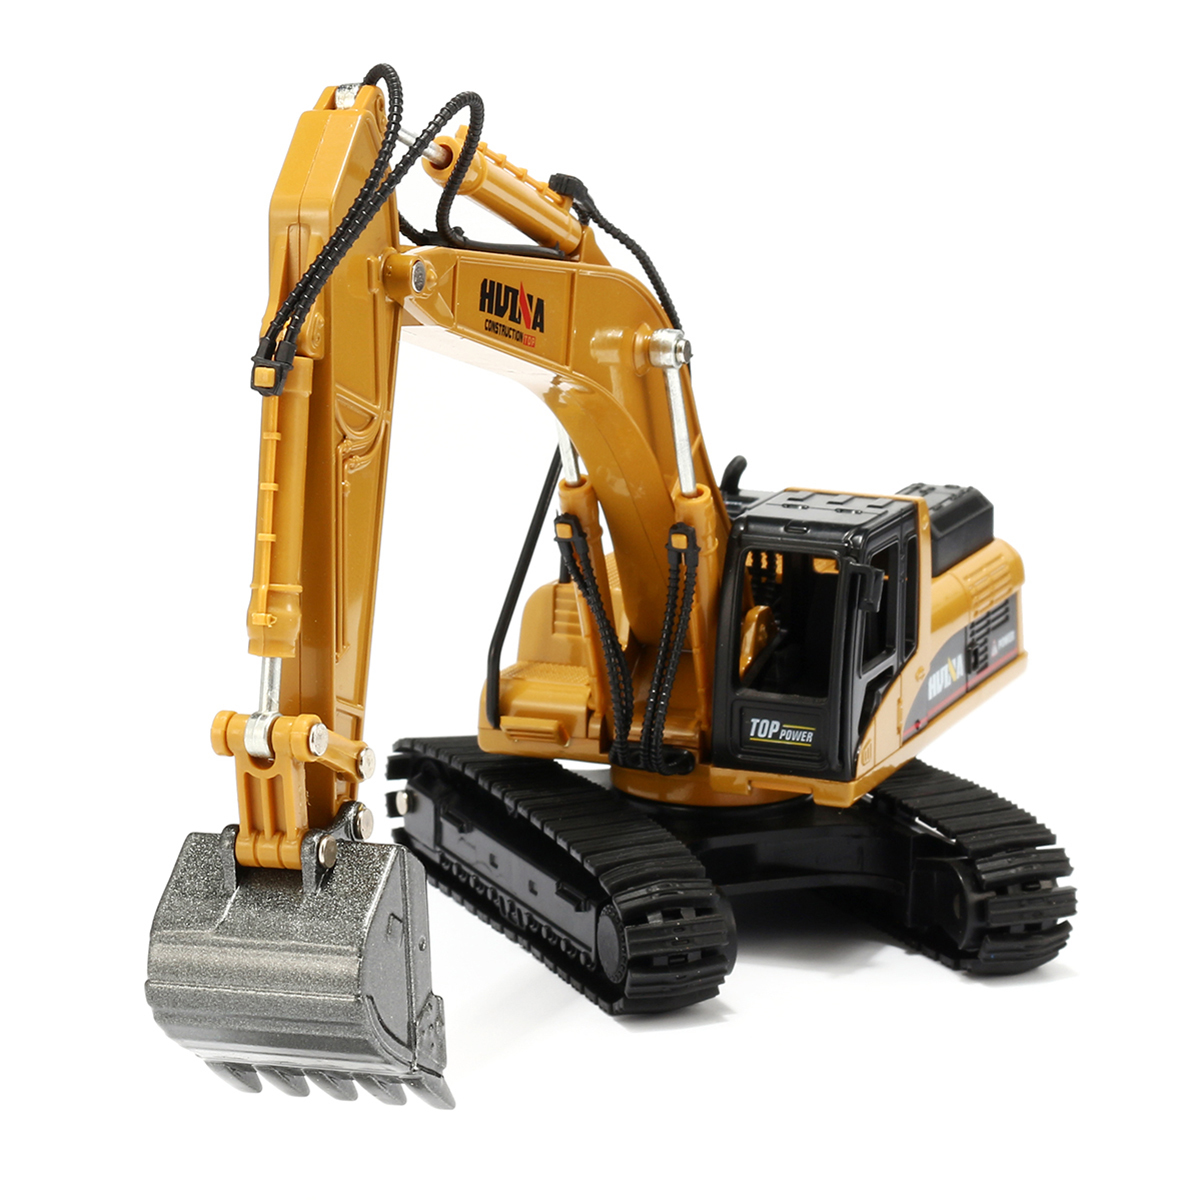 1:50 Alloy Excavator Toys Engineering Vehicle Diecast Model Metal Castings Vehicles 2